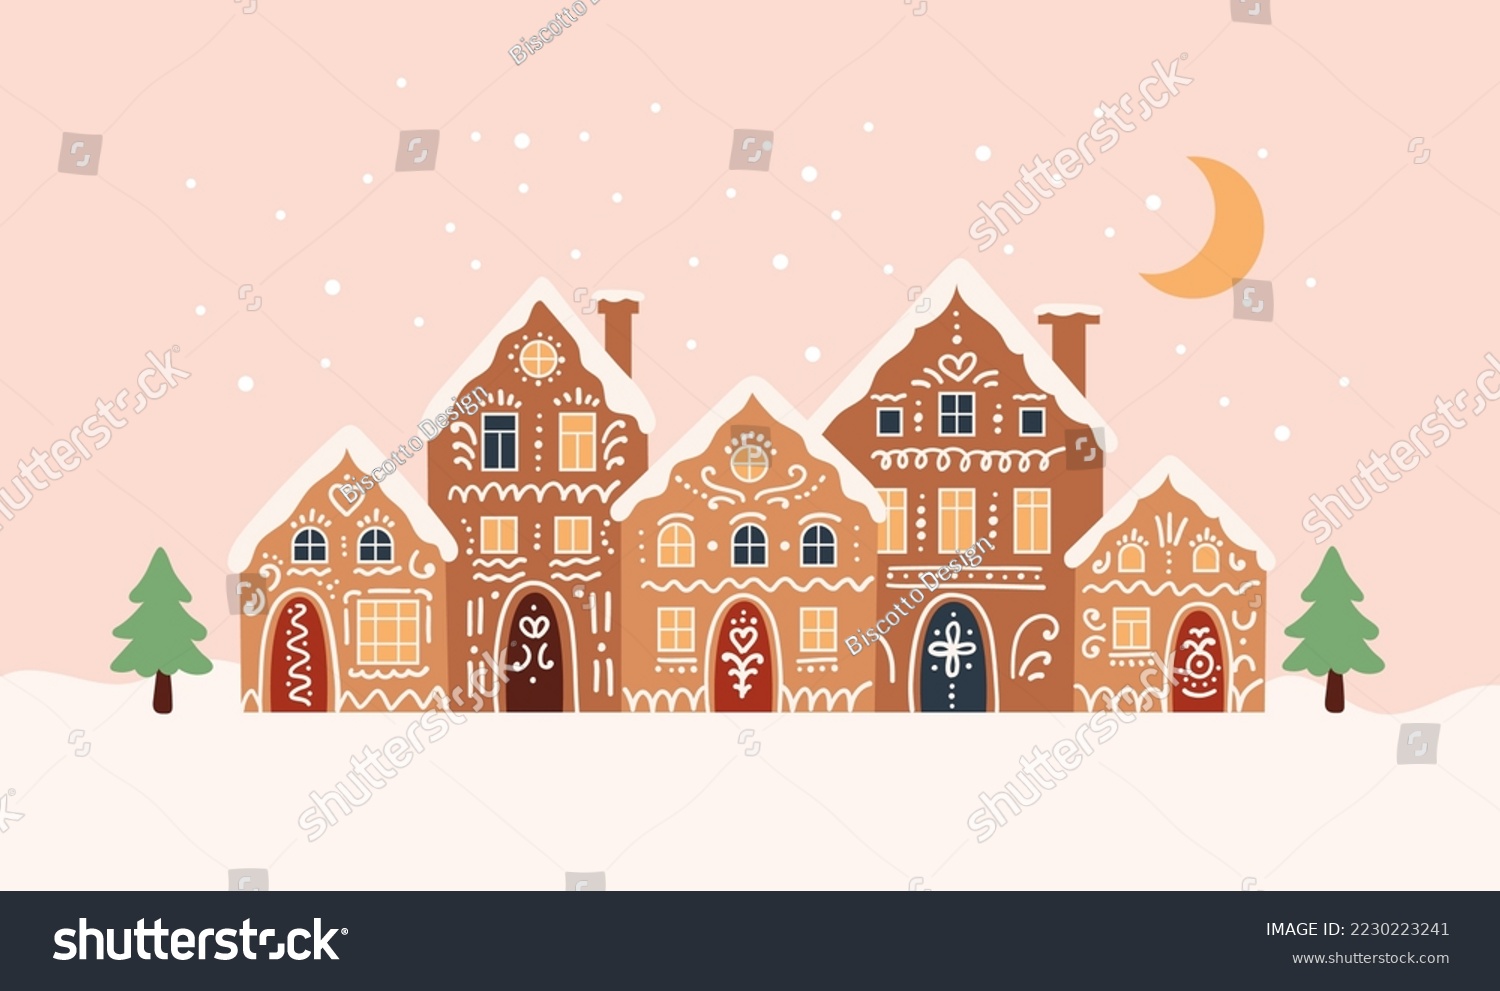 Gingerbread houses christmas scene. Cute vector illustration in flat cartoon style #2230223241